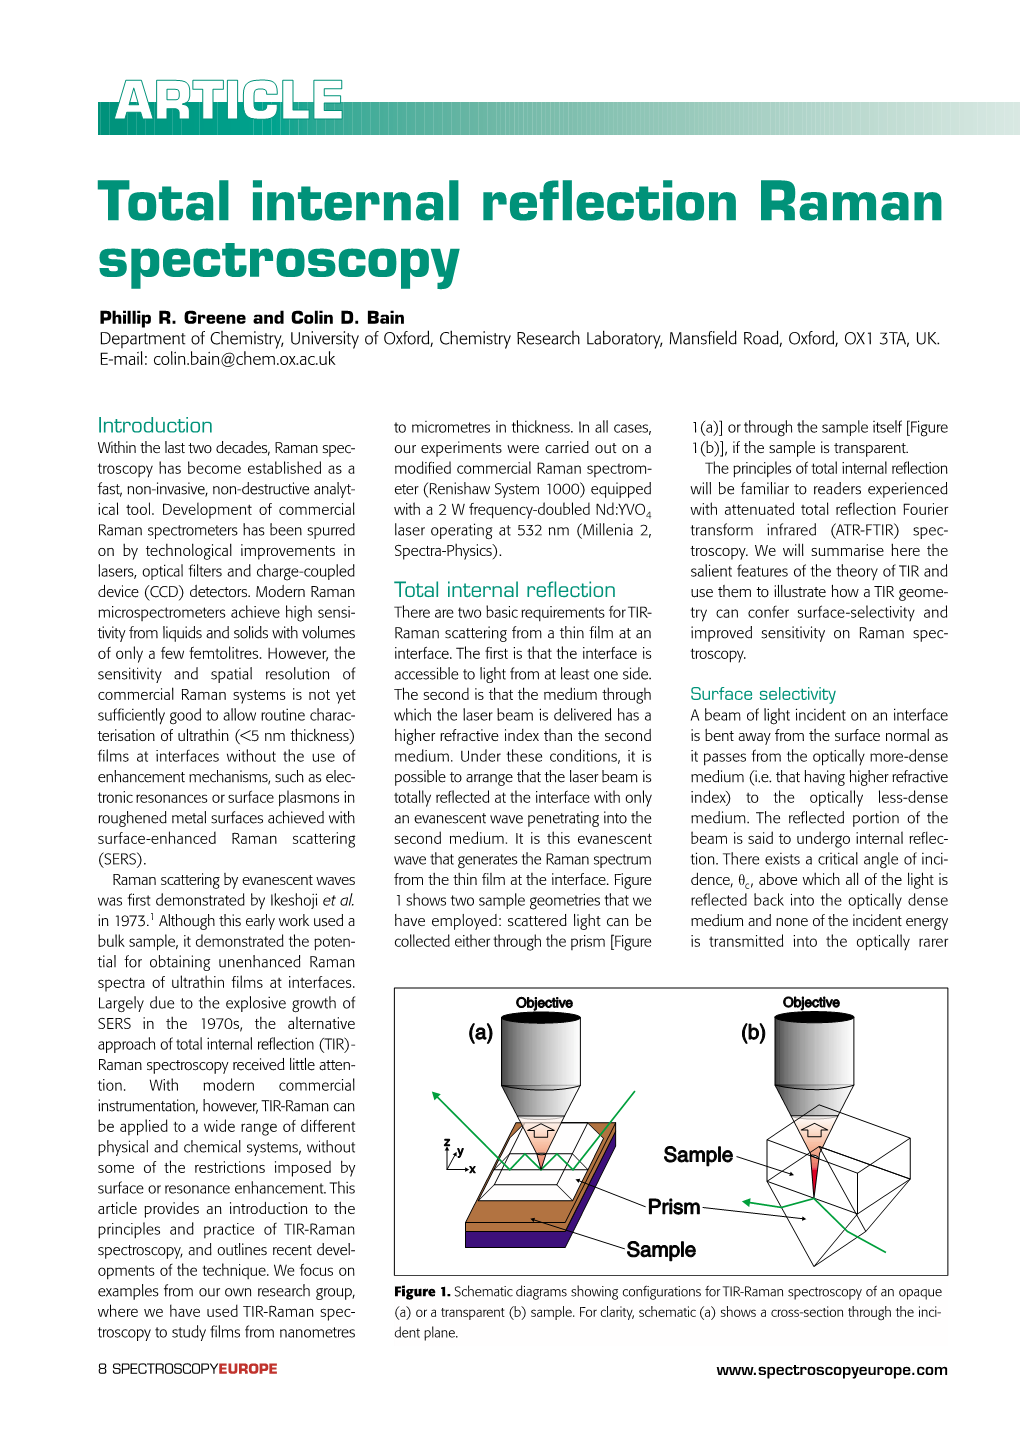 ARTICLE Total Internal Reflection Raman Spectroscopy